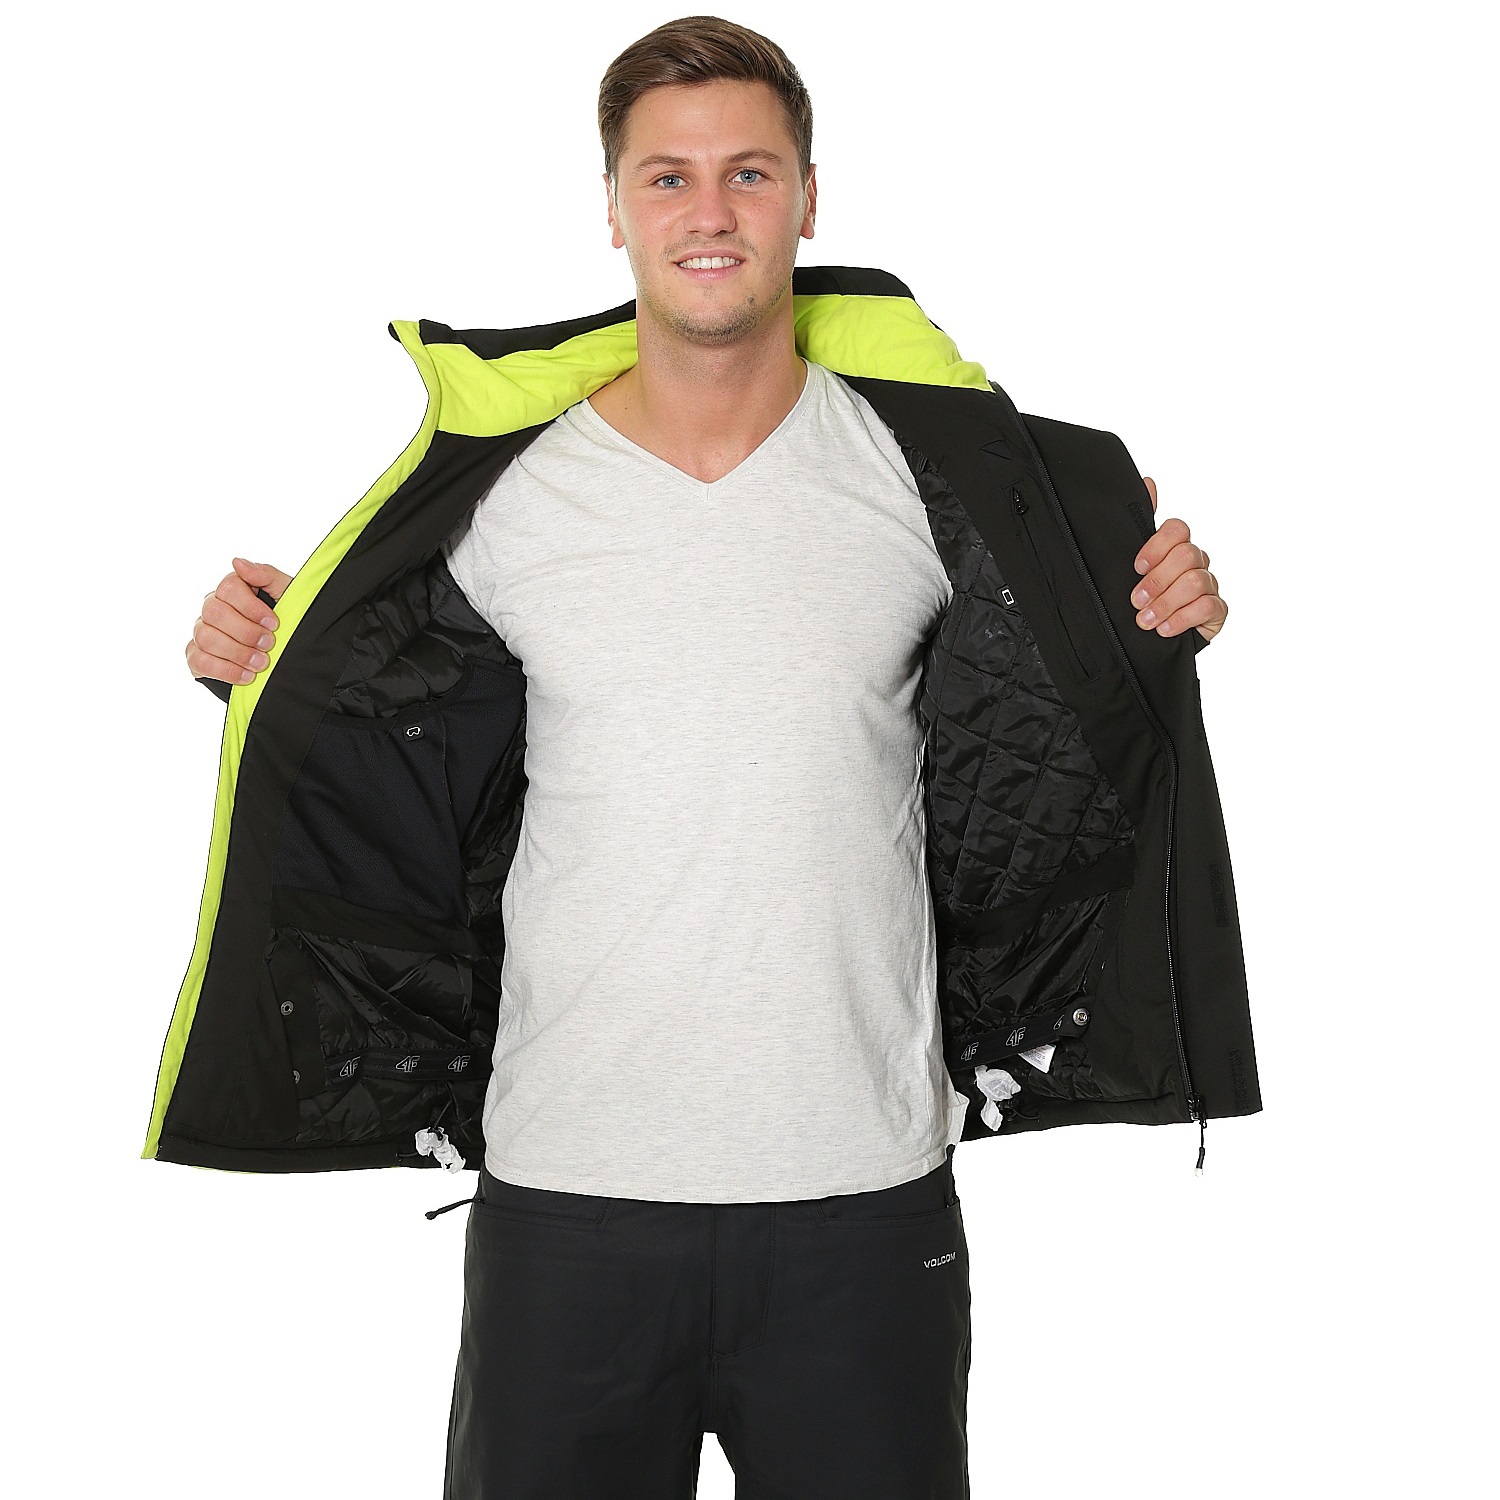 Geci Ski & Snow -  4f Ski Jacket KUMN257